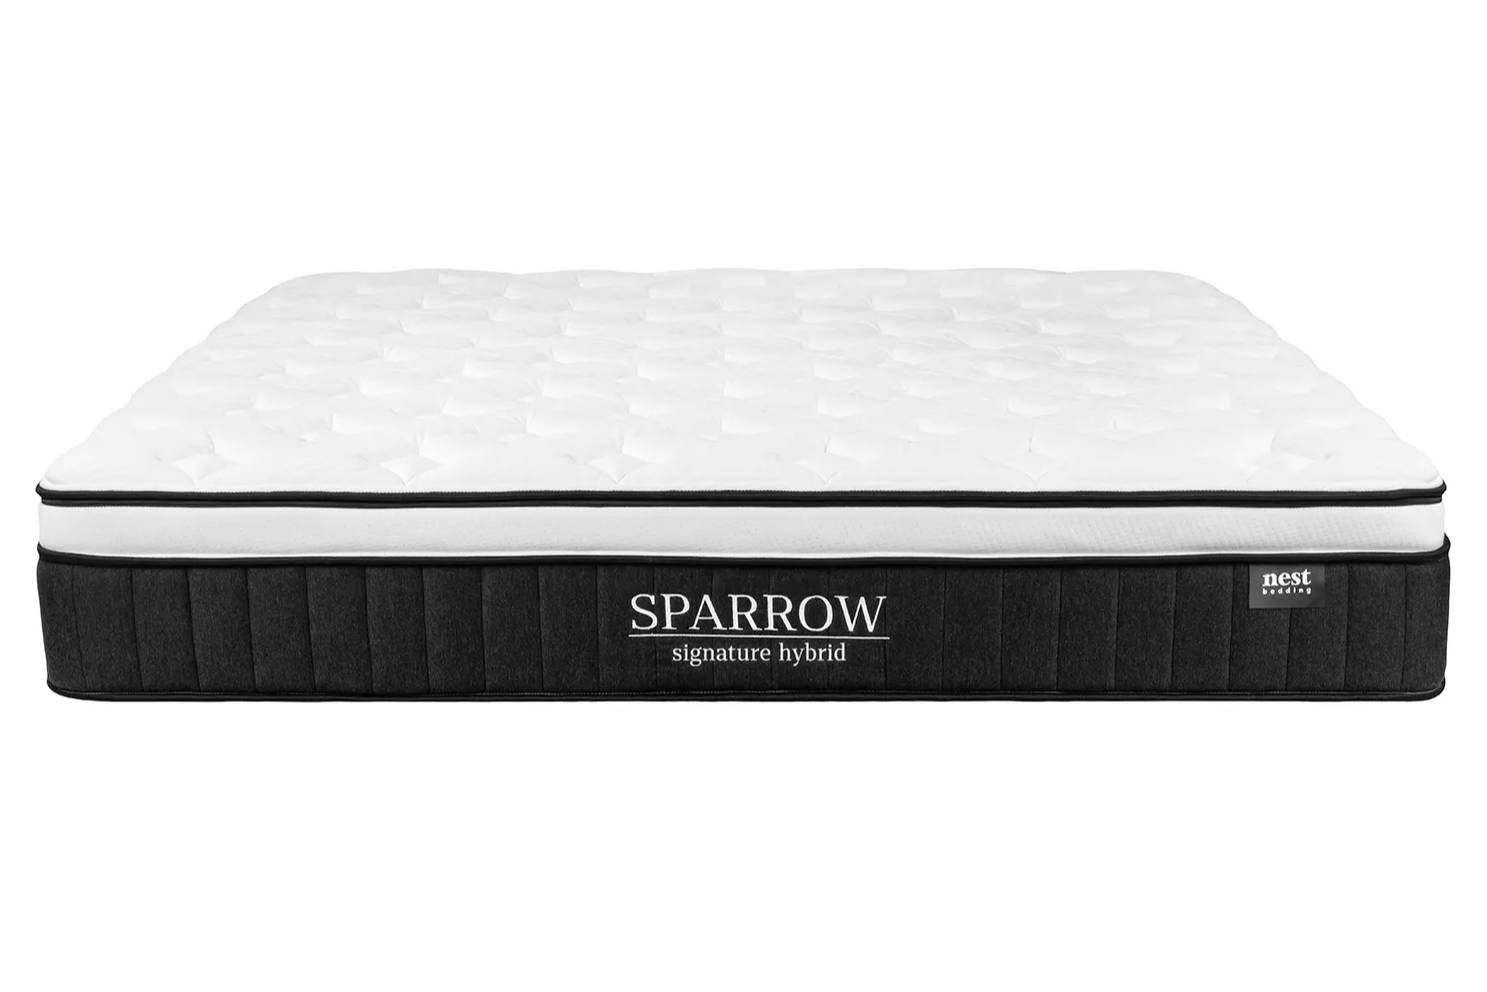 Sparrow hybrid mattress